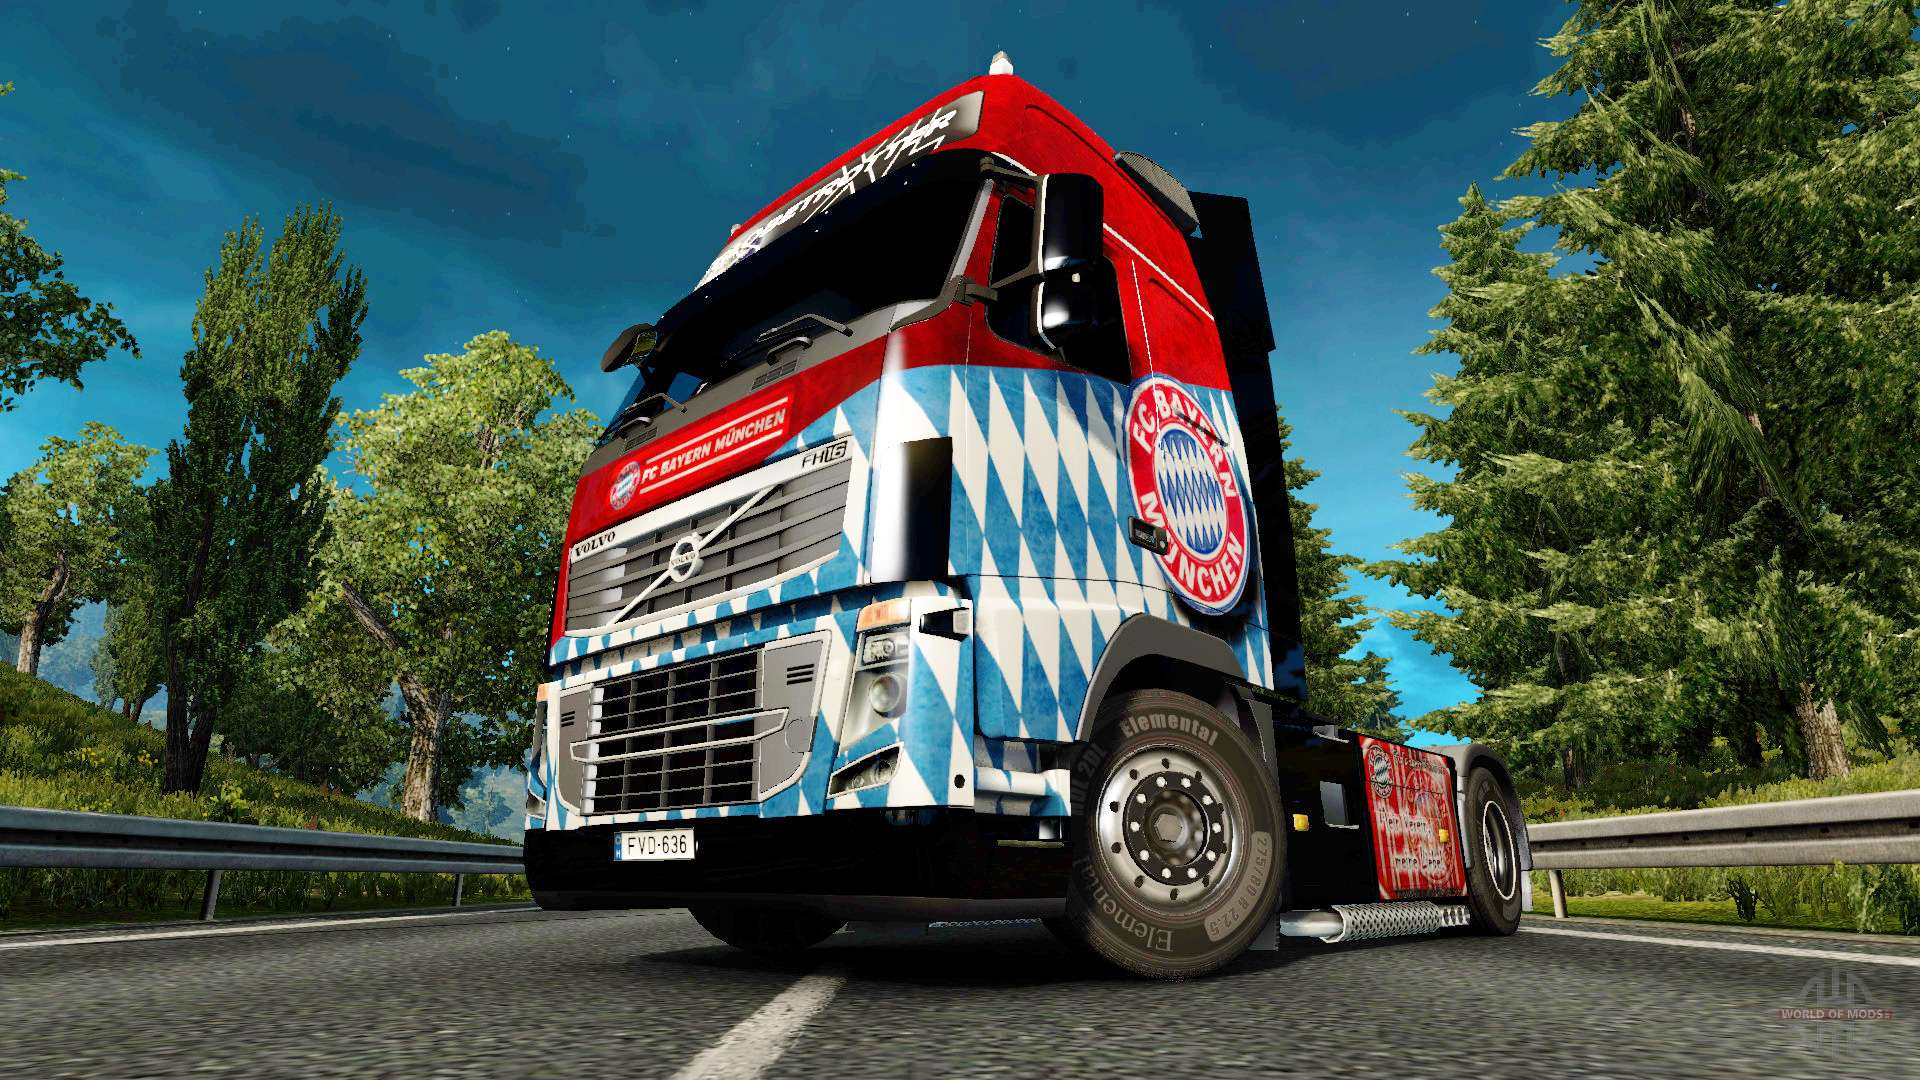 Xbox One skin for Volvo truck for Euro Truck Simulator 2